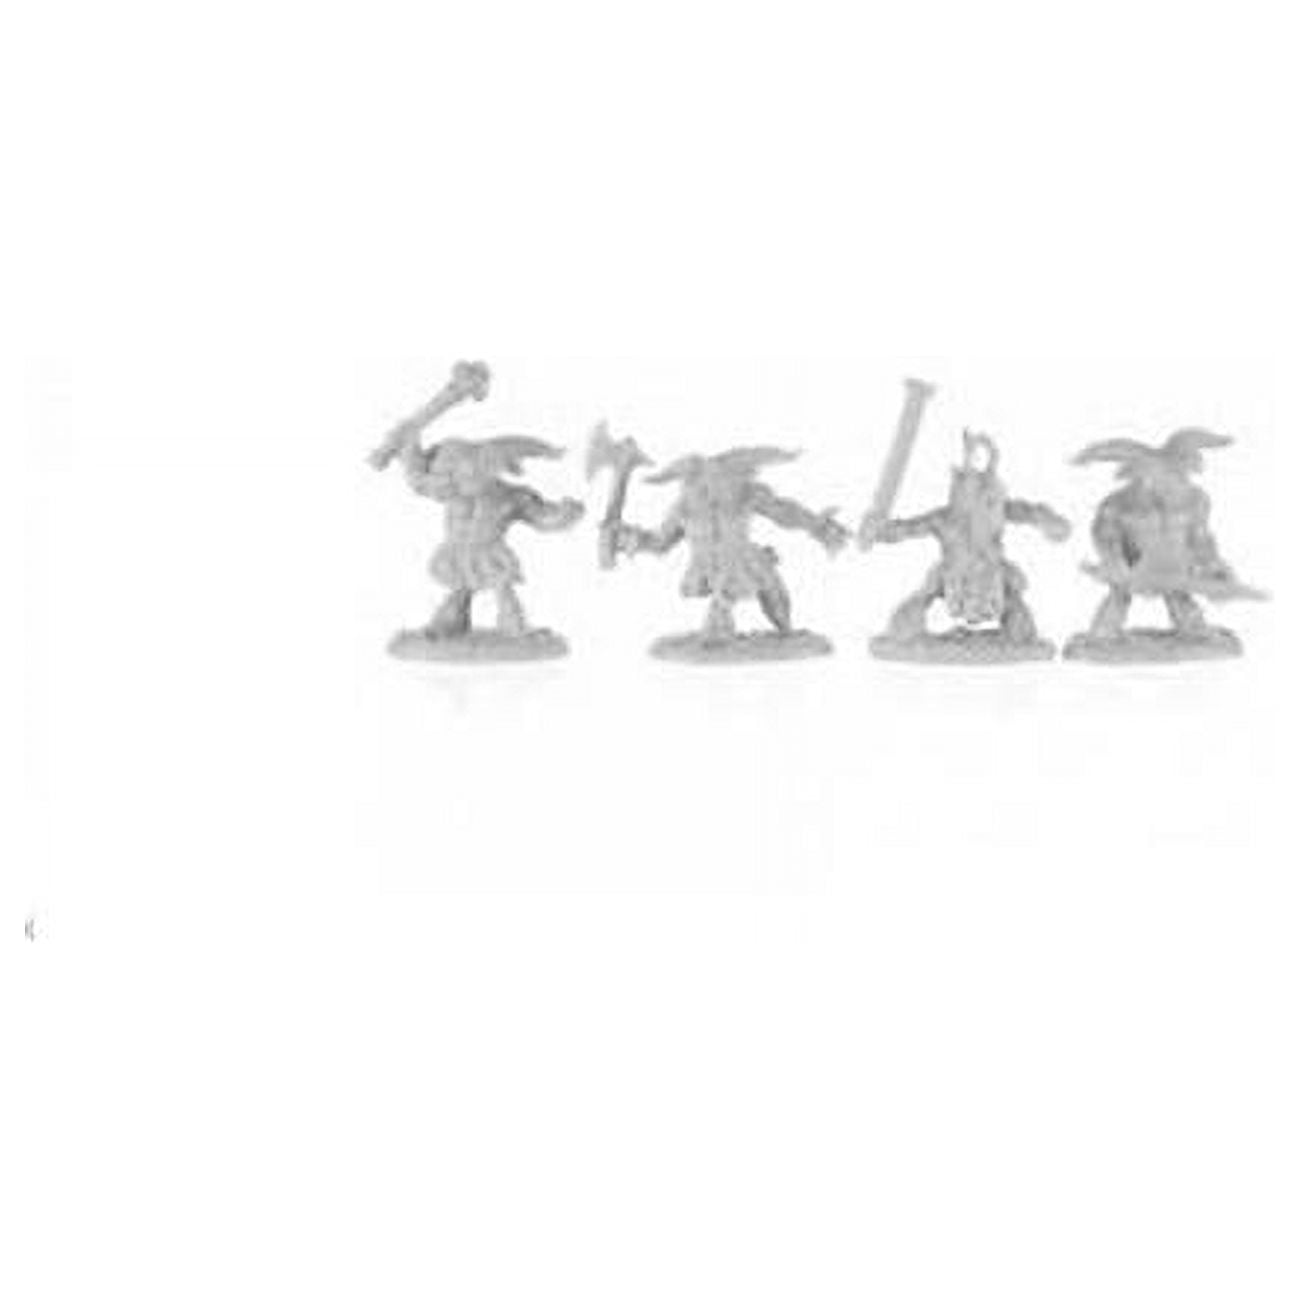 Picture of Reaper Miniatures REM77680 Bones Minitaurs Miniatures